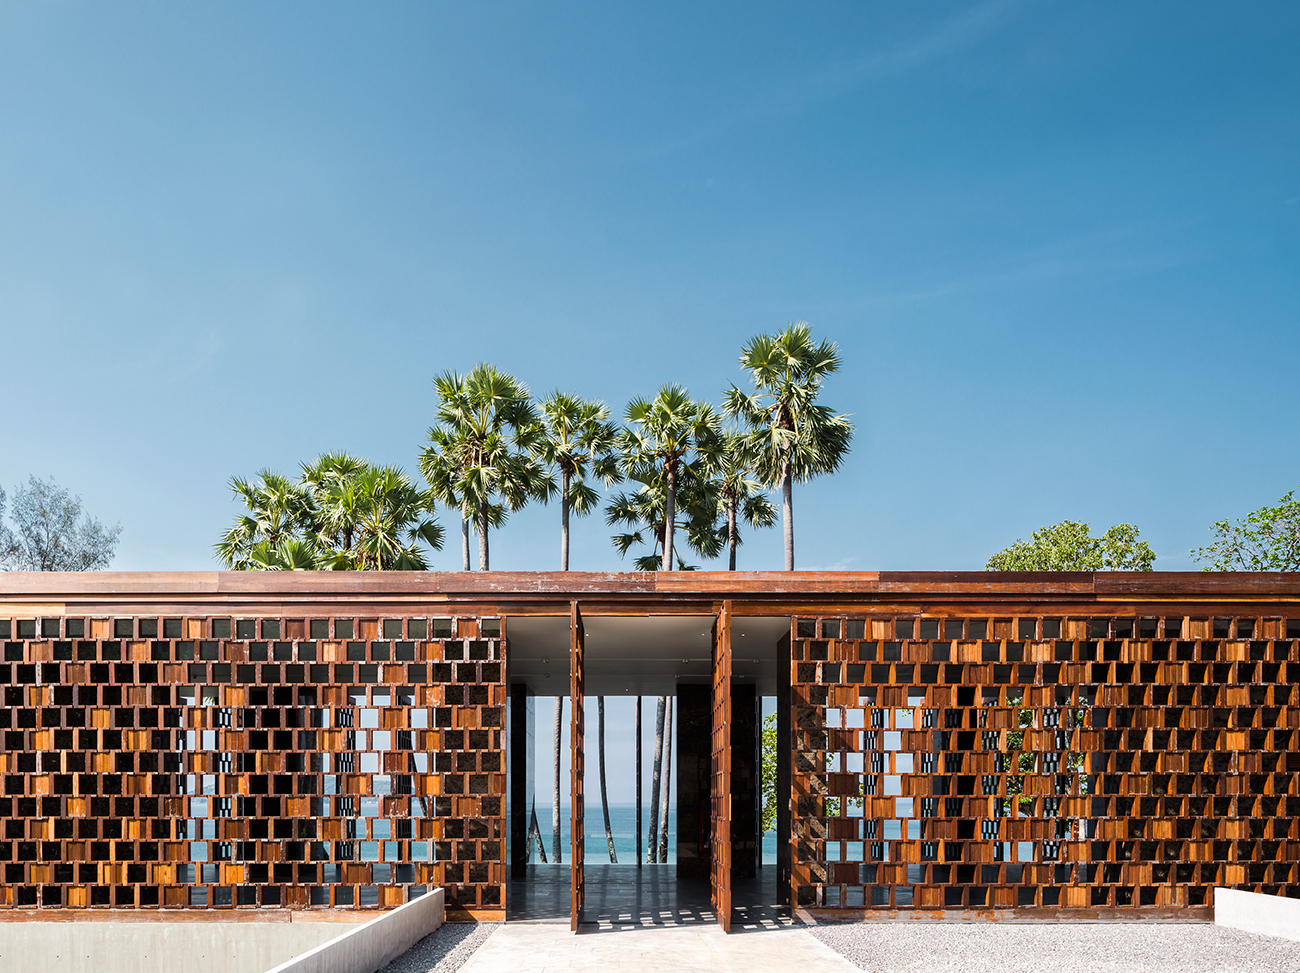  Naka Phuket Hotel designed by DBALP 